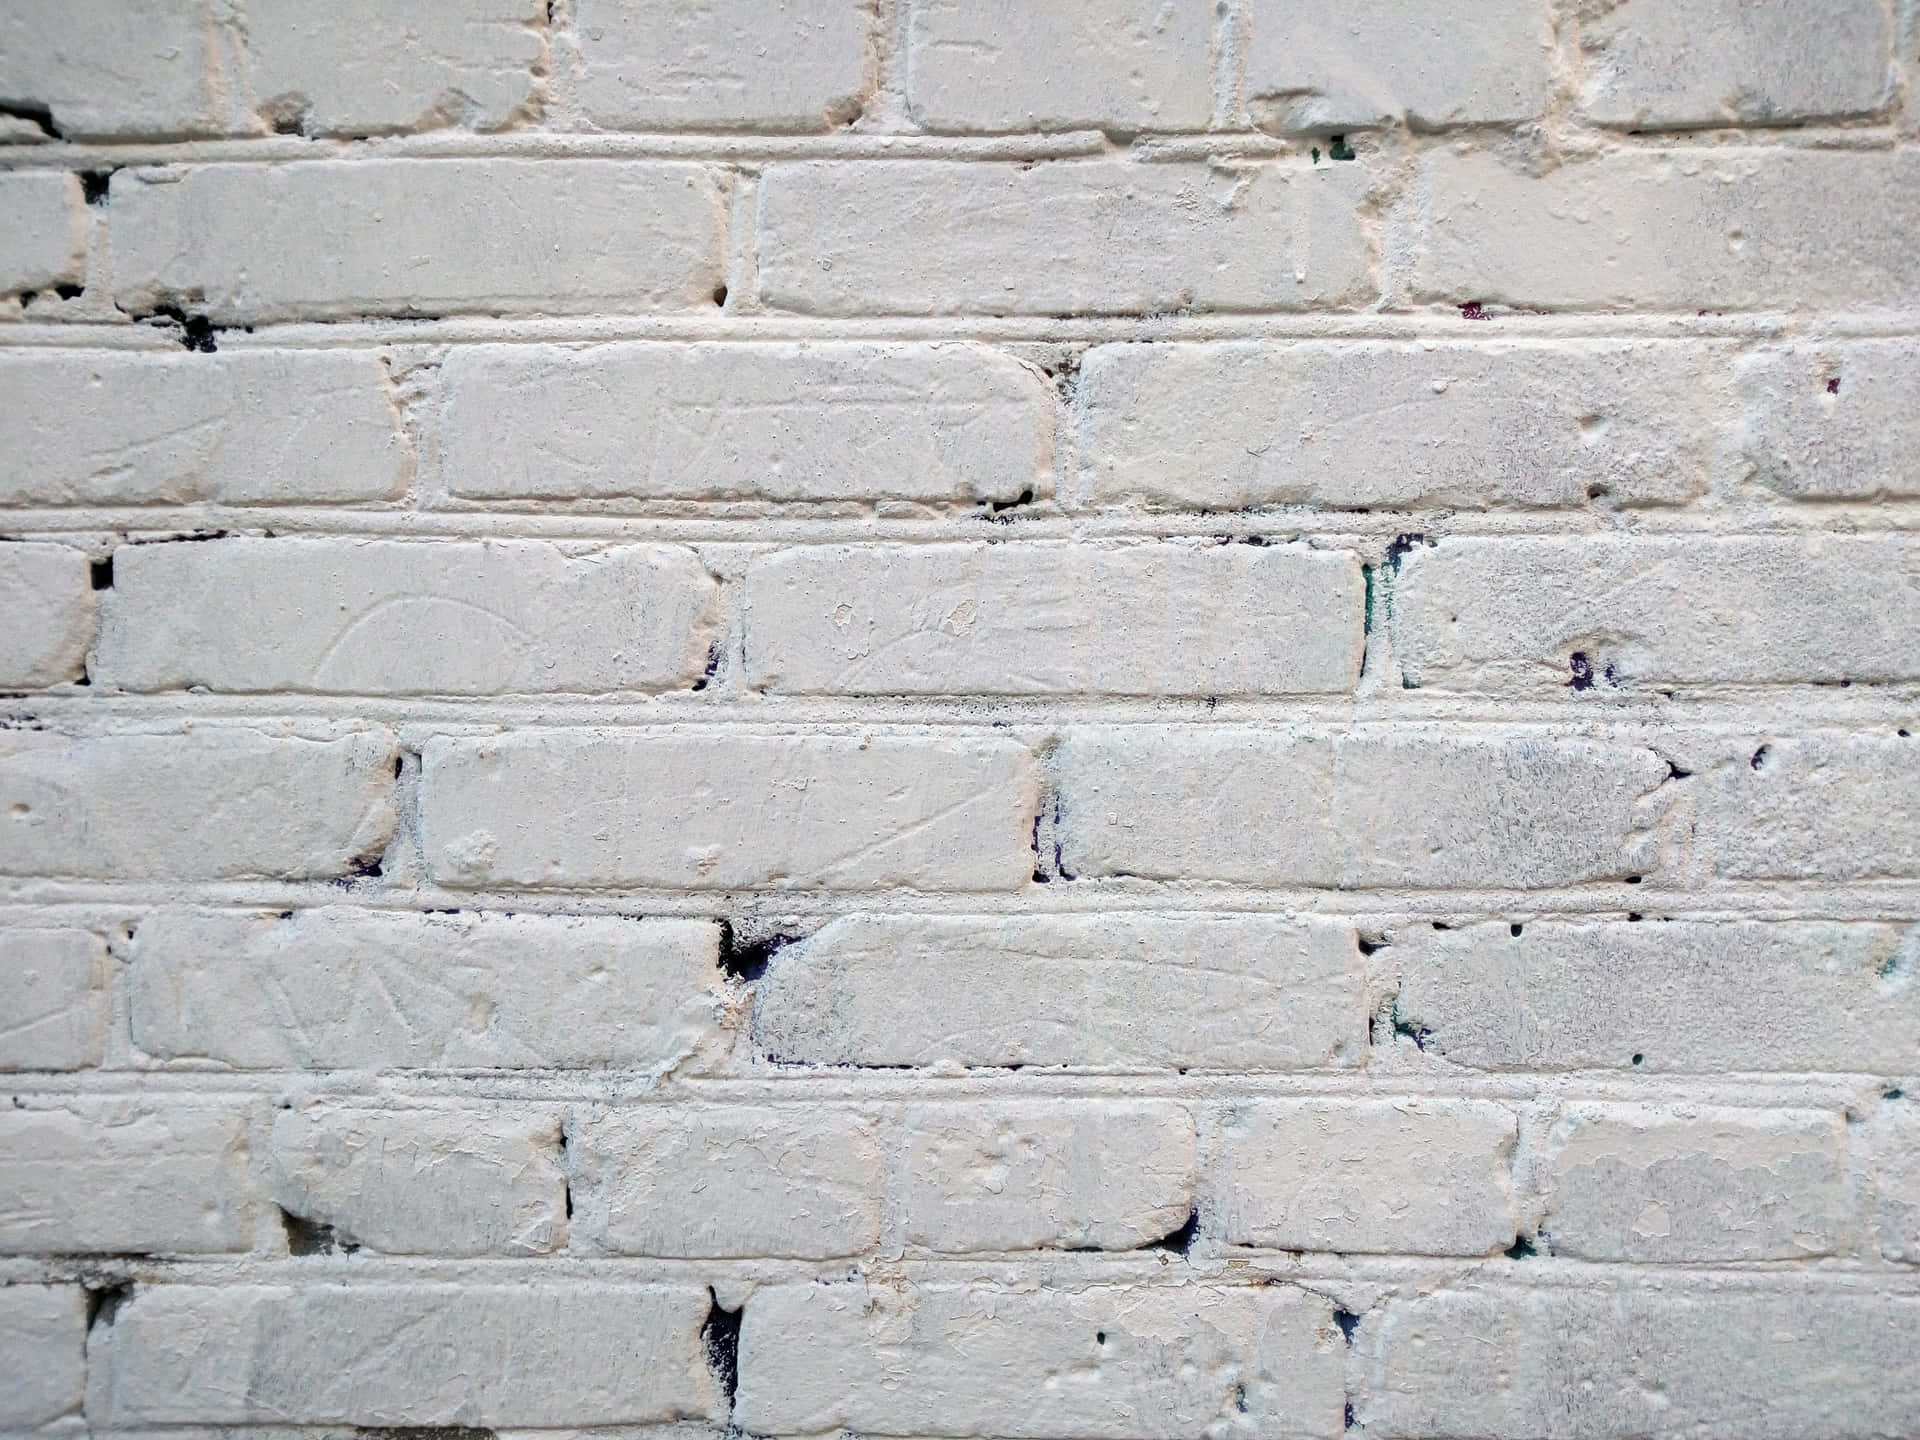 A White Brick Wall